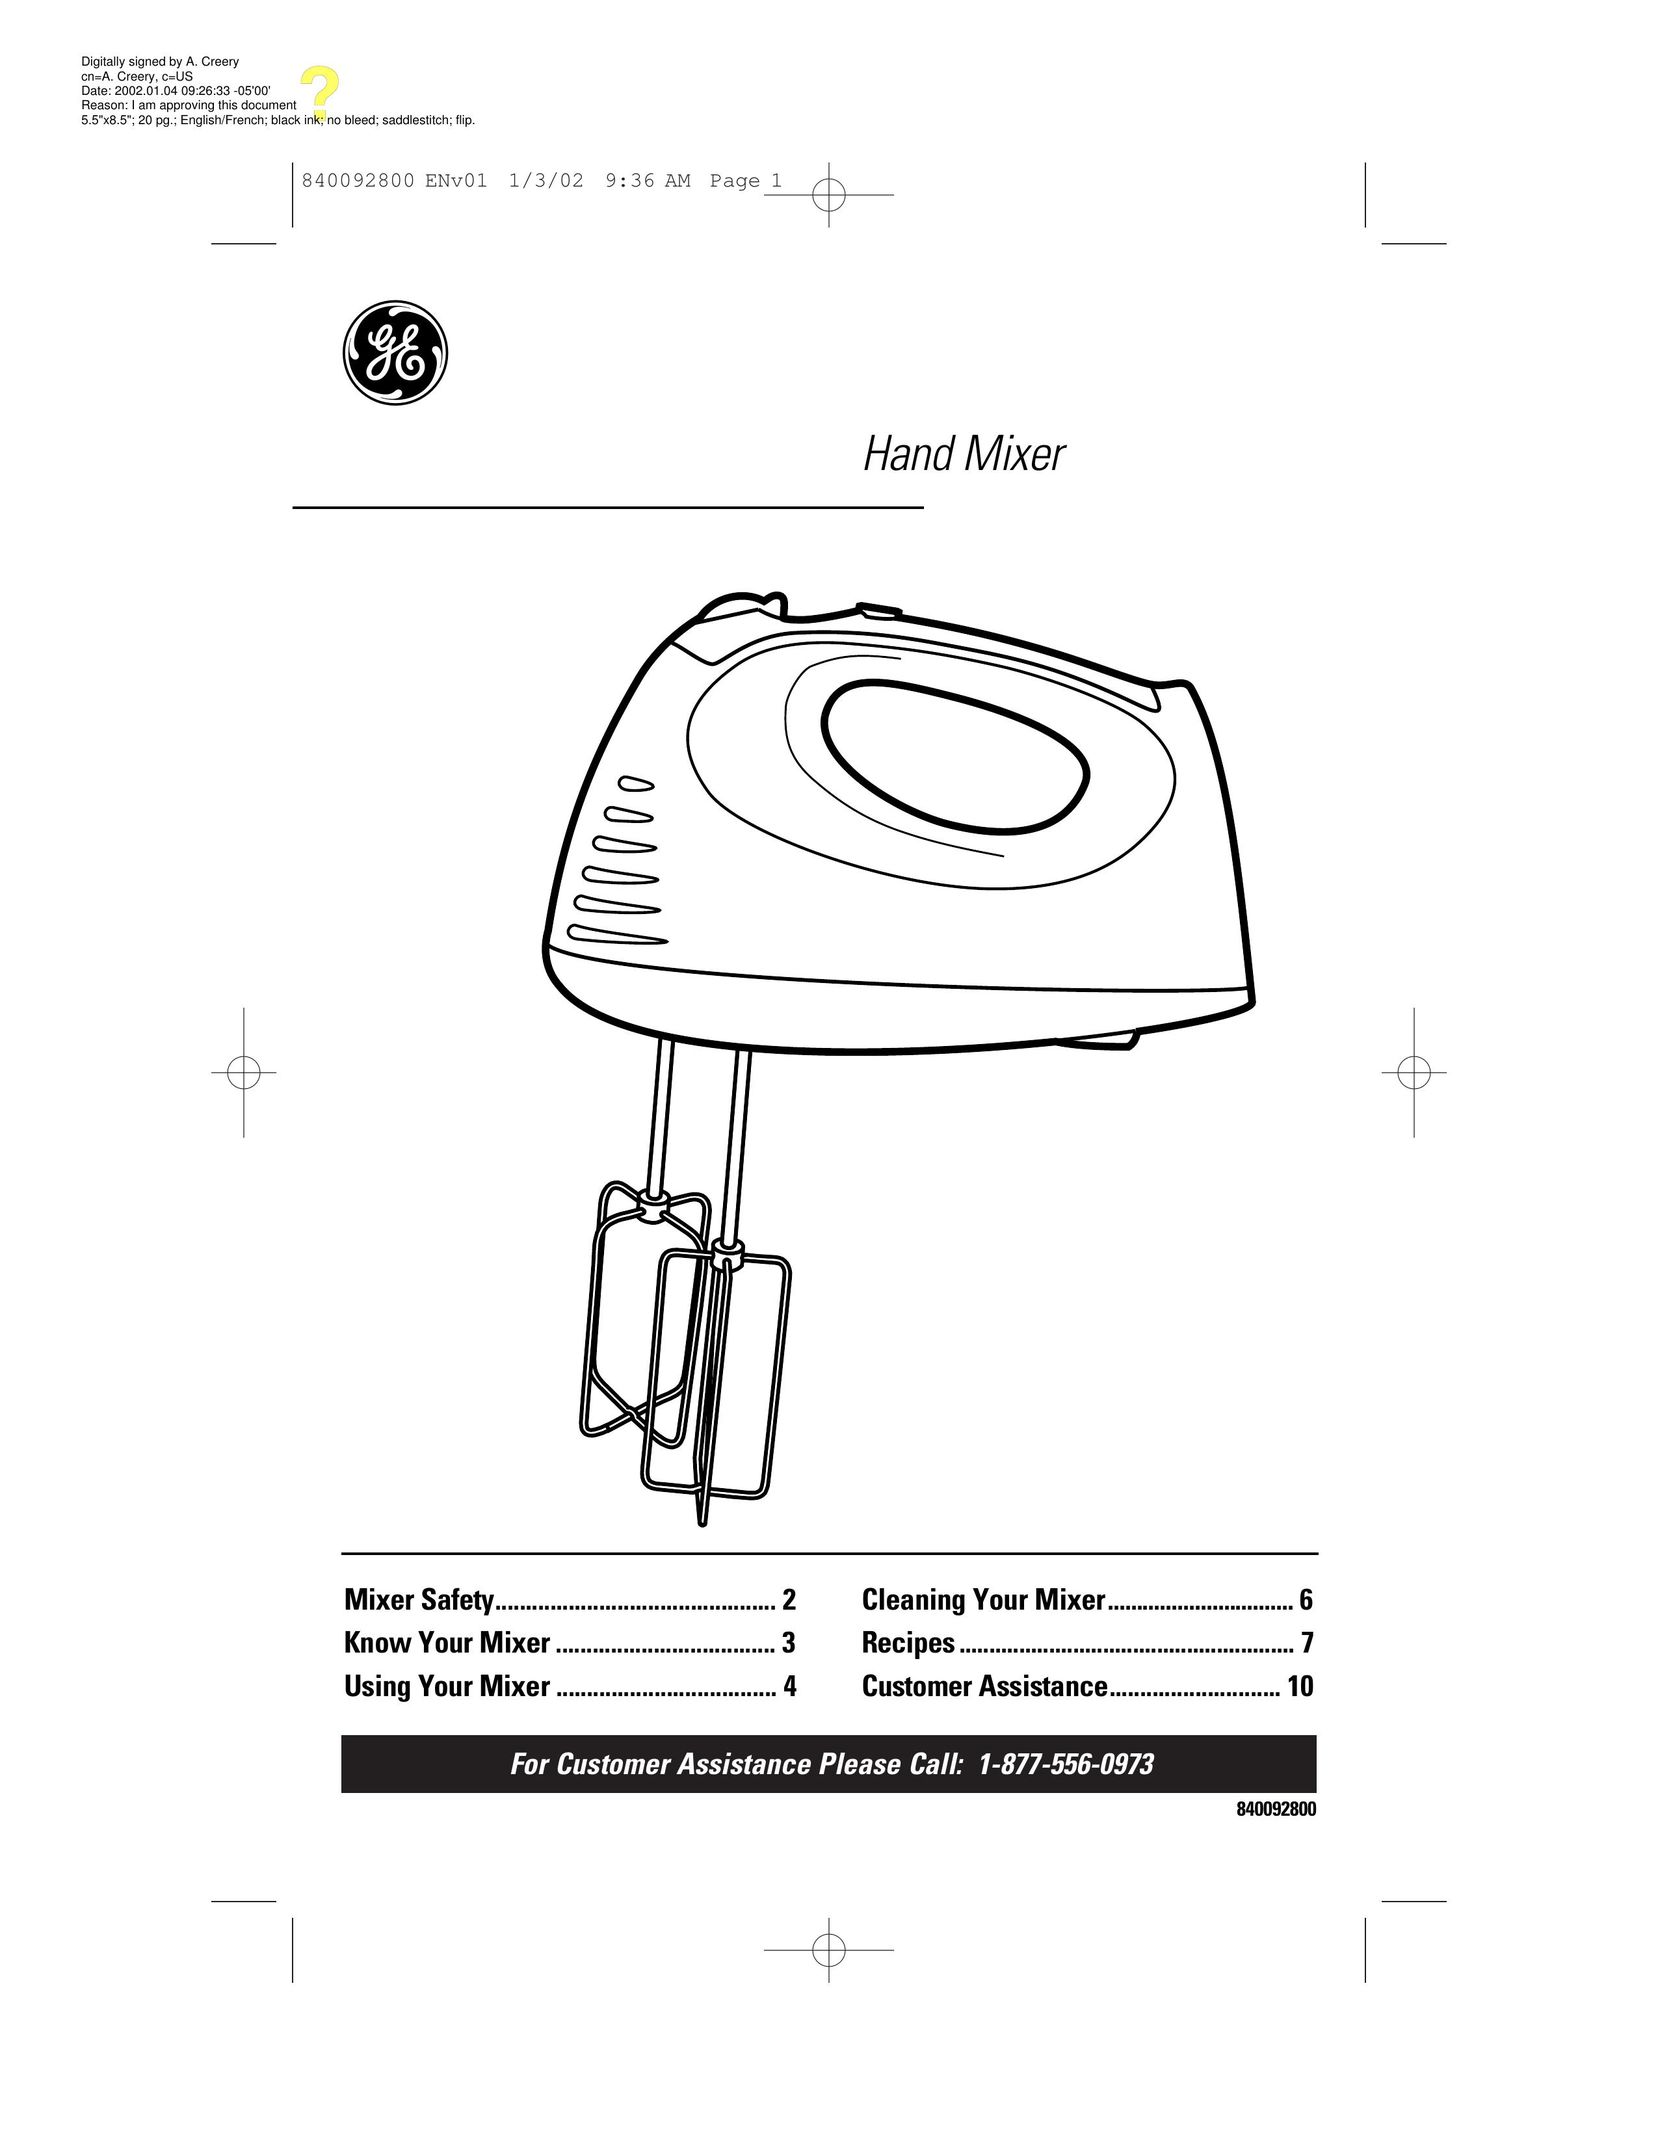 GE 840092800 Mixer User Manual